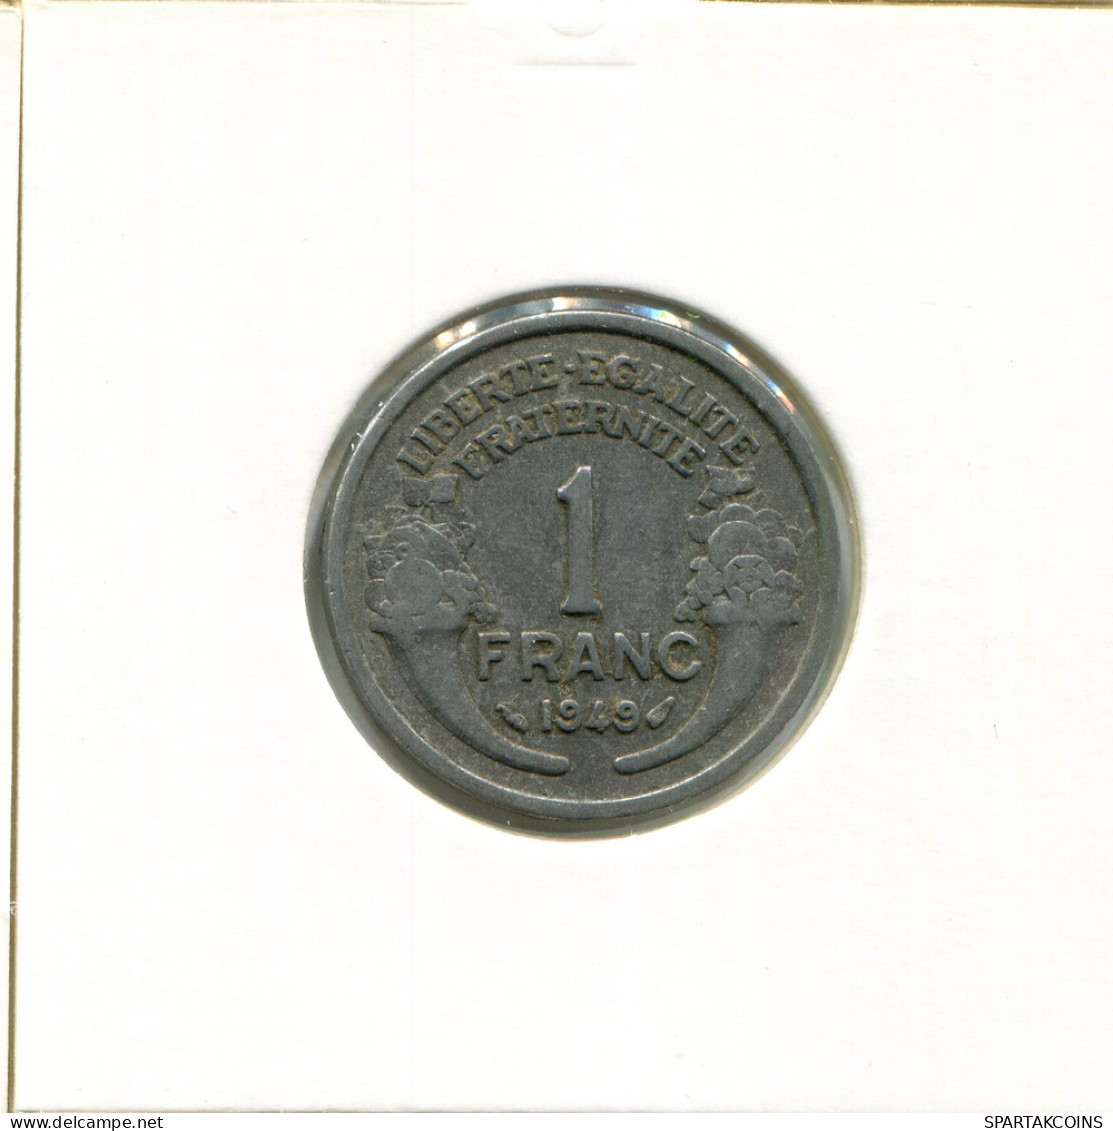 1 FRANC 1949 FRANCE Coin French Coin #AK599 - 1 Franc